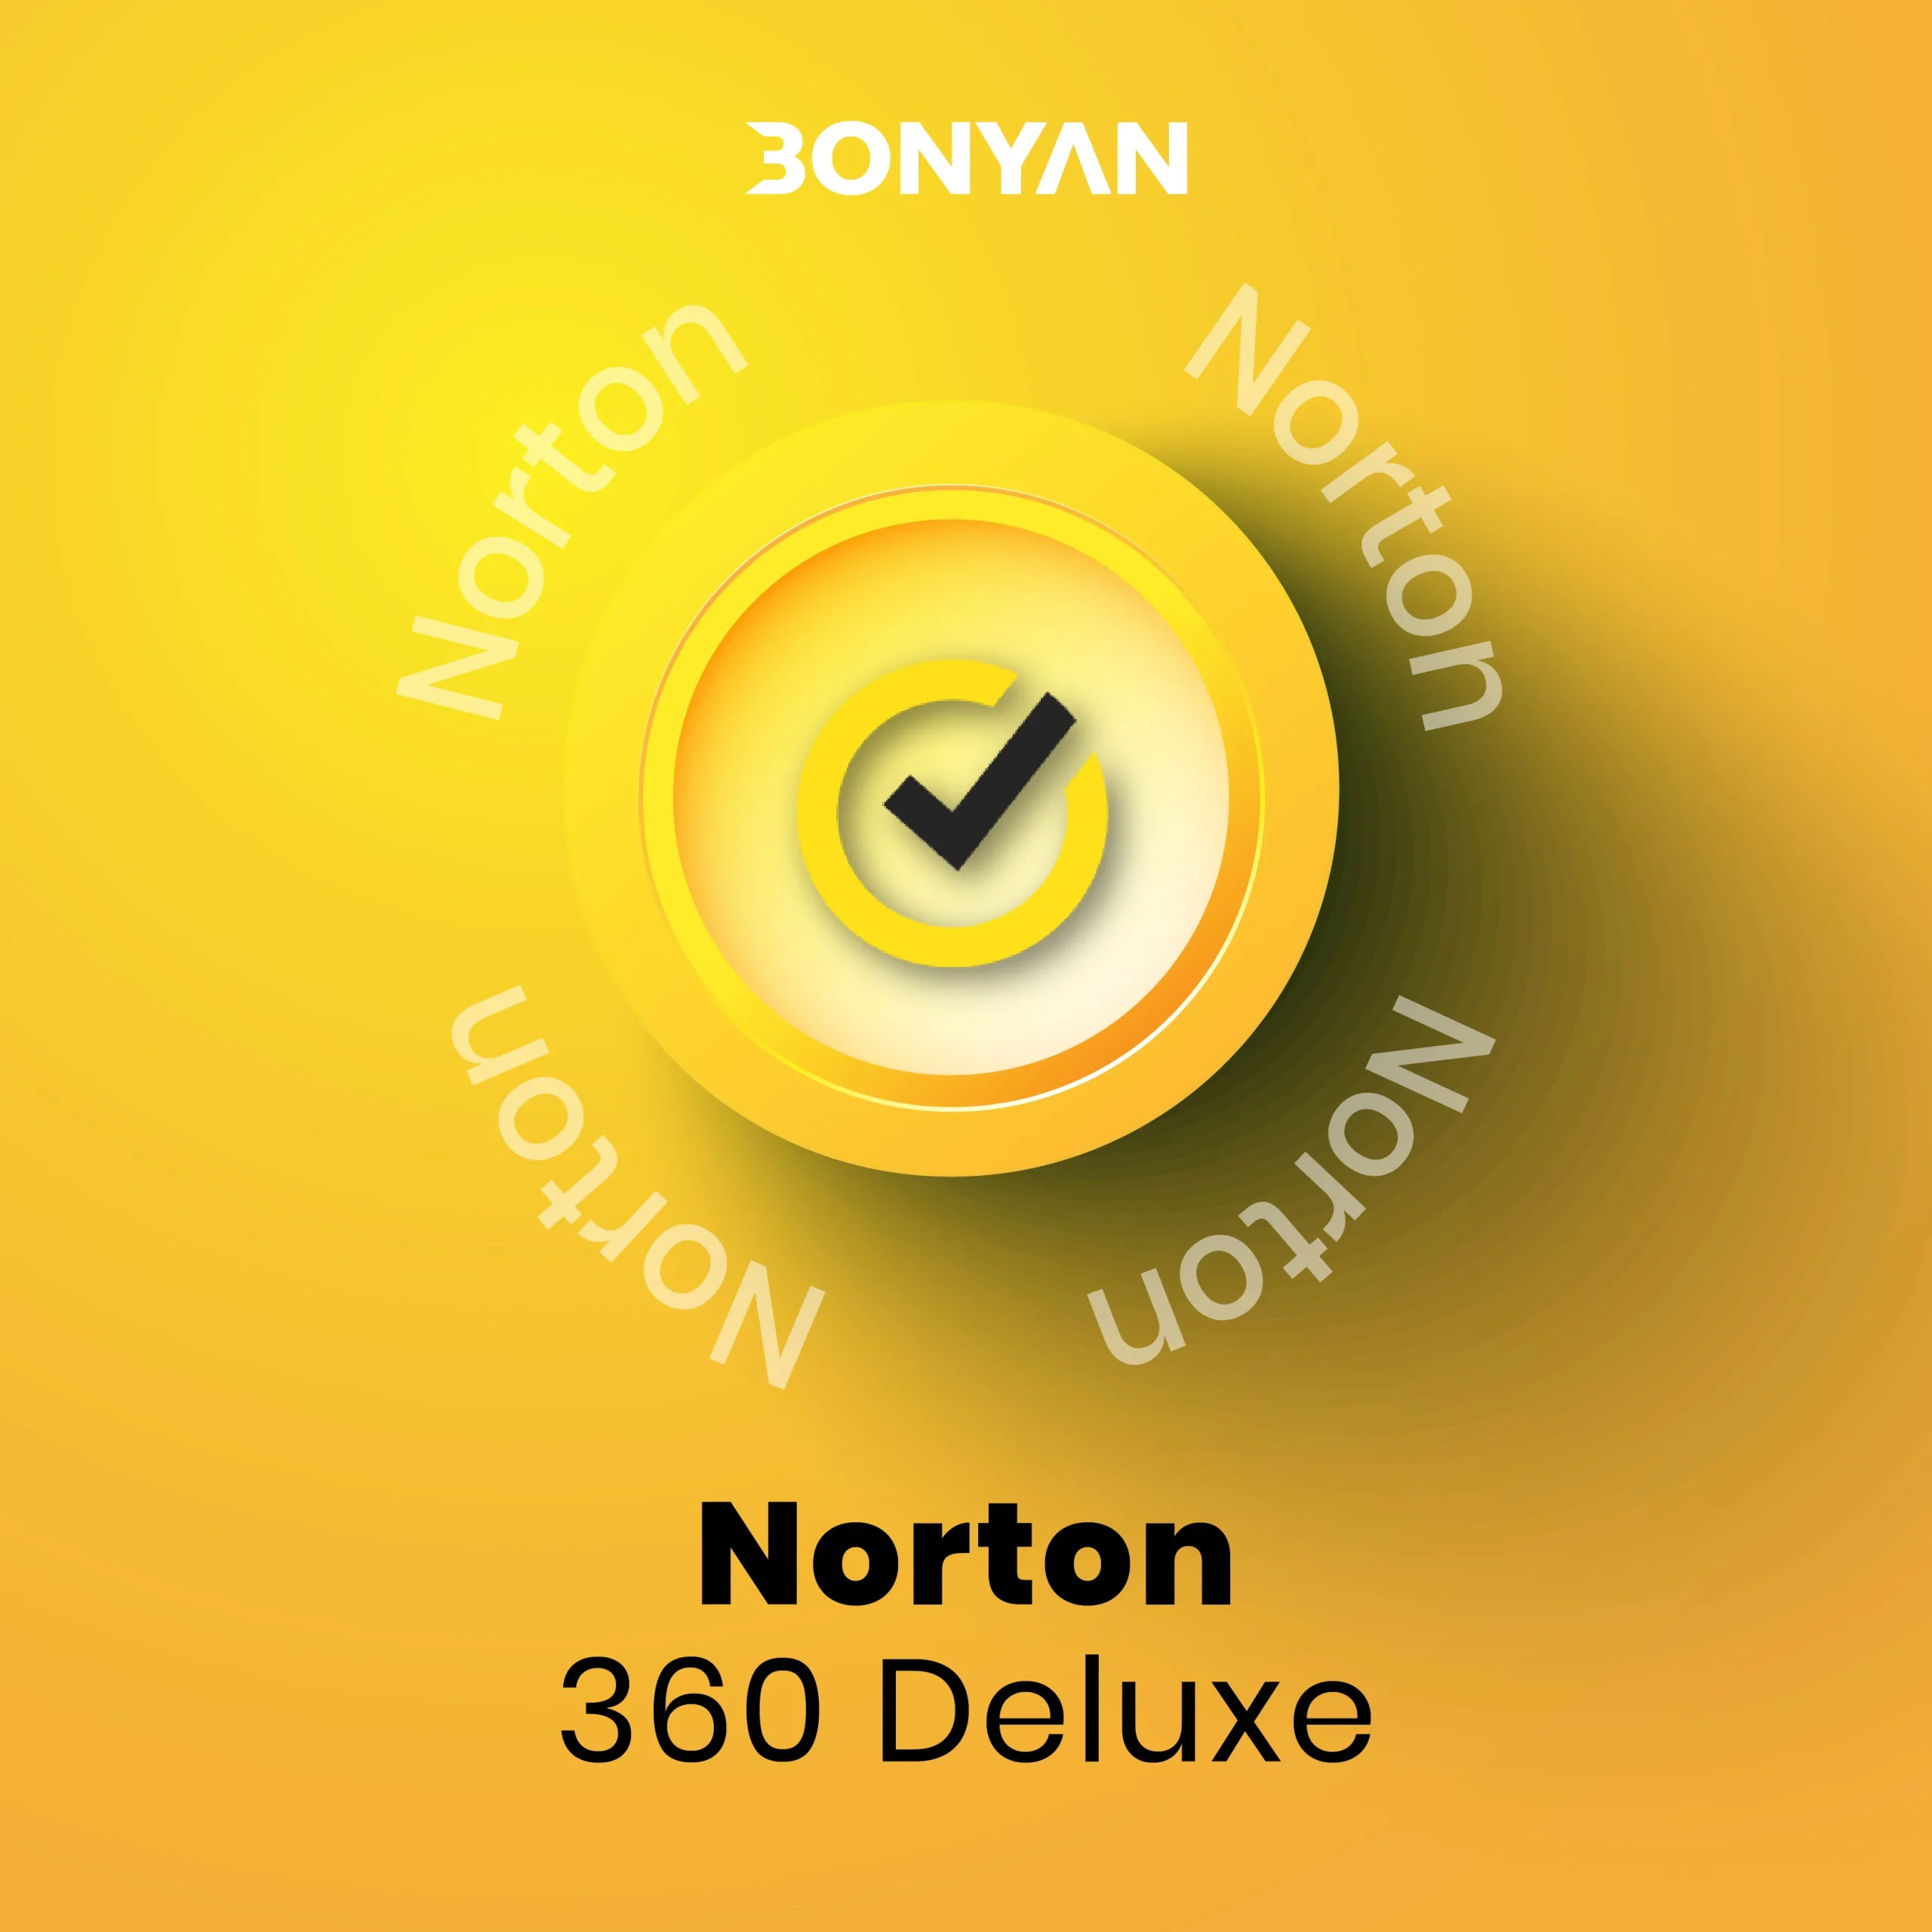 خرید norton 360 deluxe